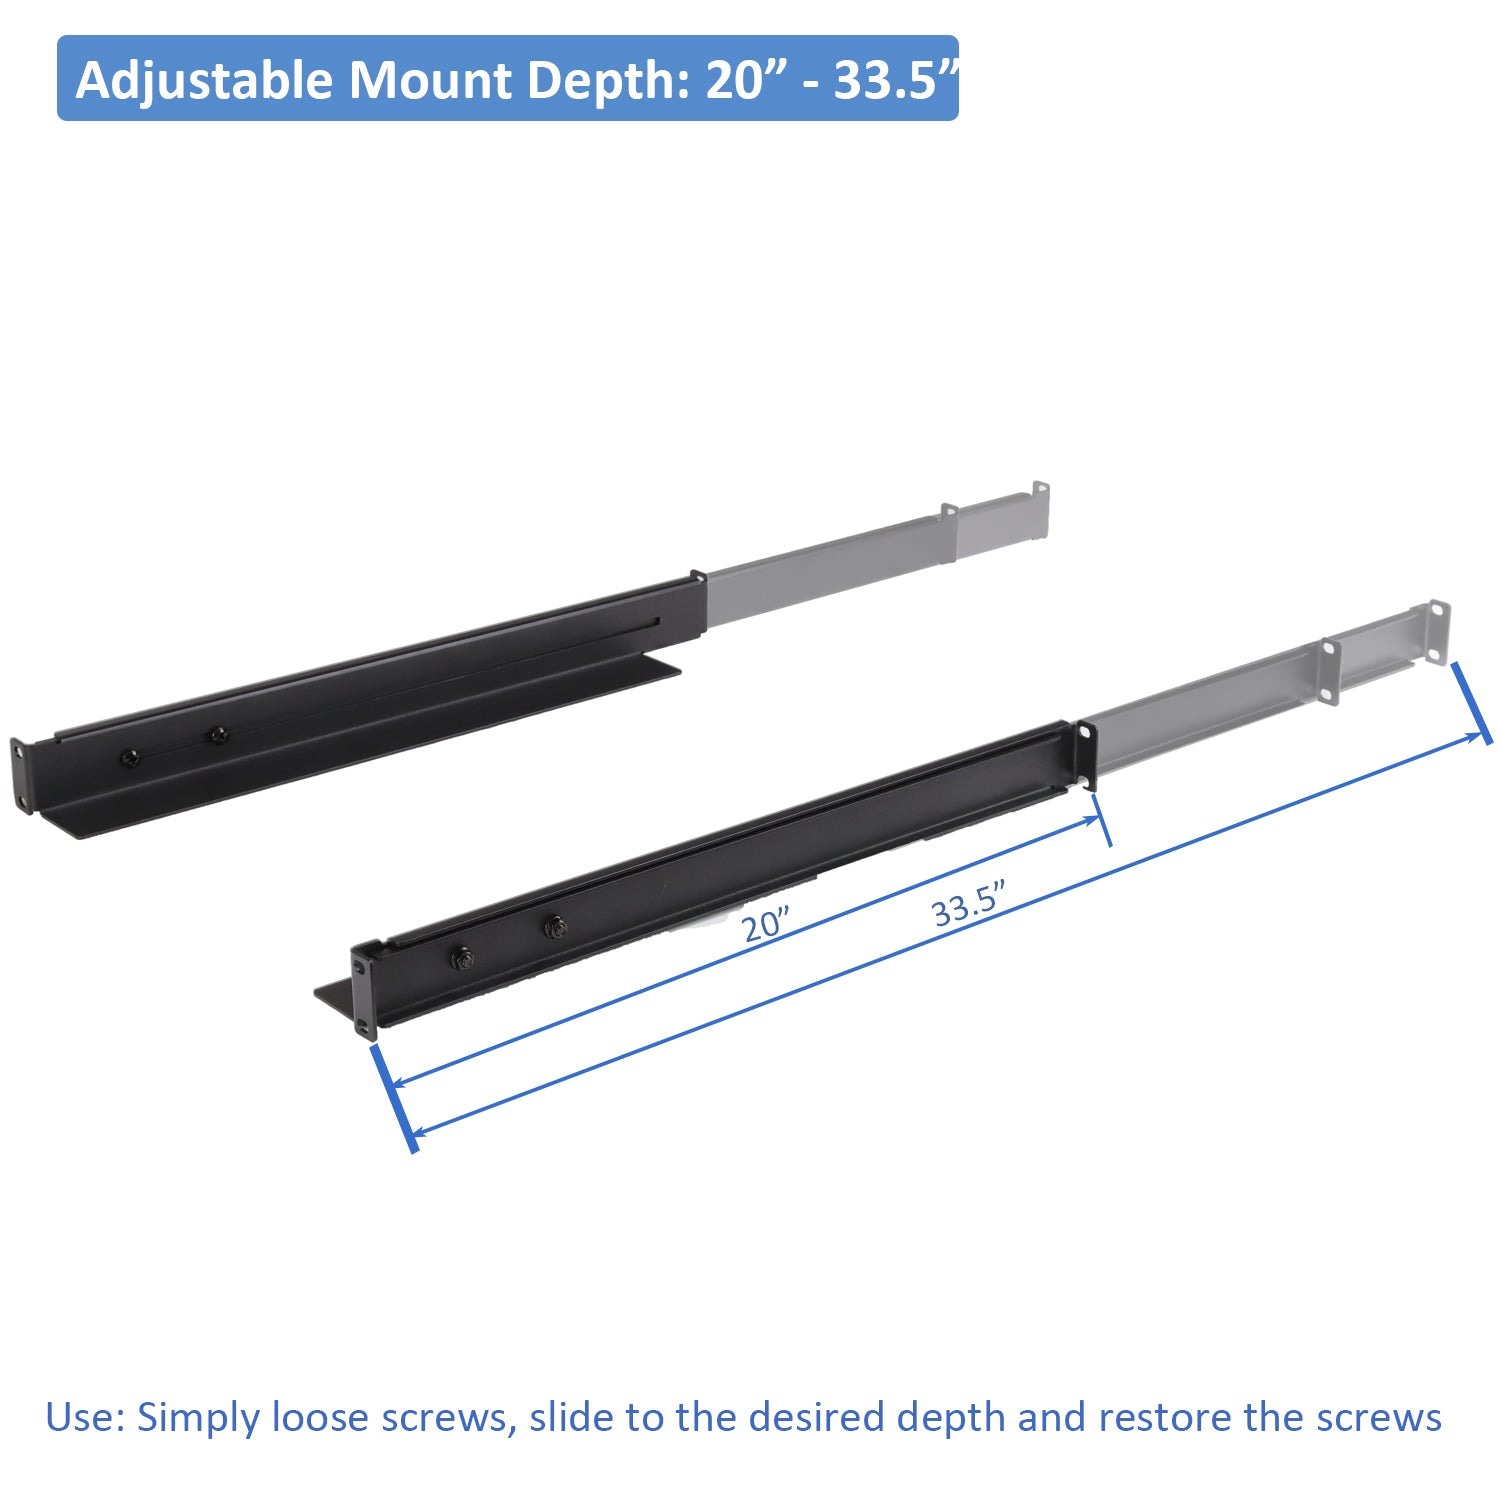 Aeons Universal 1U Adjustable Rack Mount Server Shelf Rails, up to 33.5-inch Depth